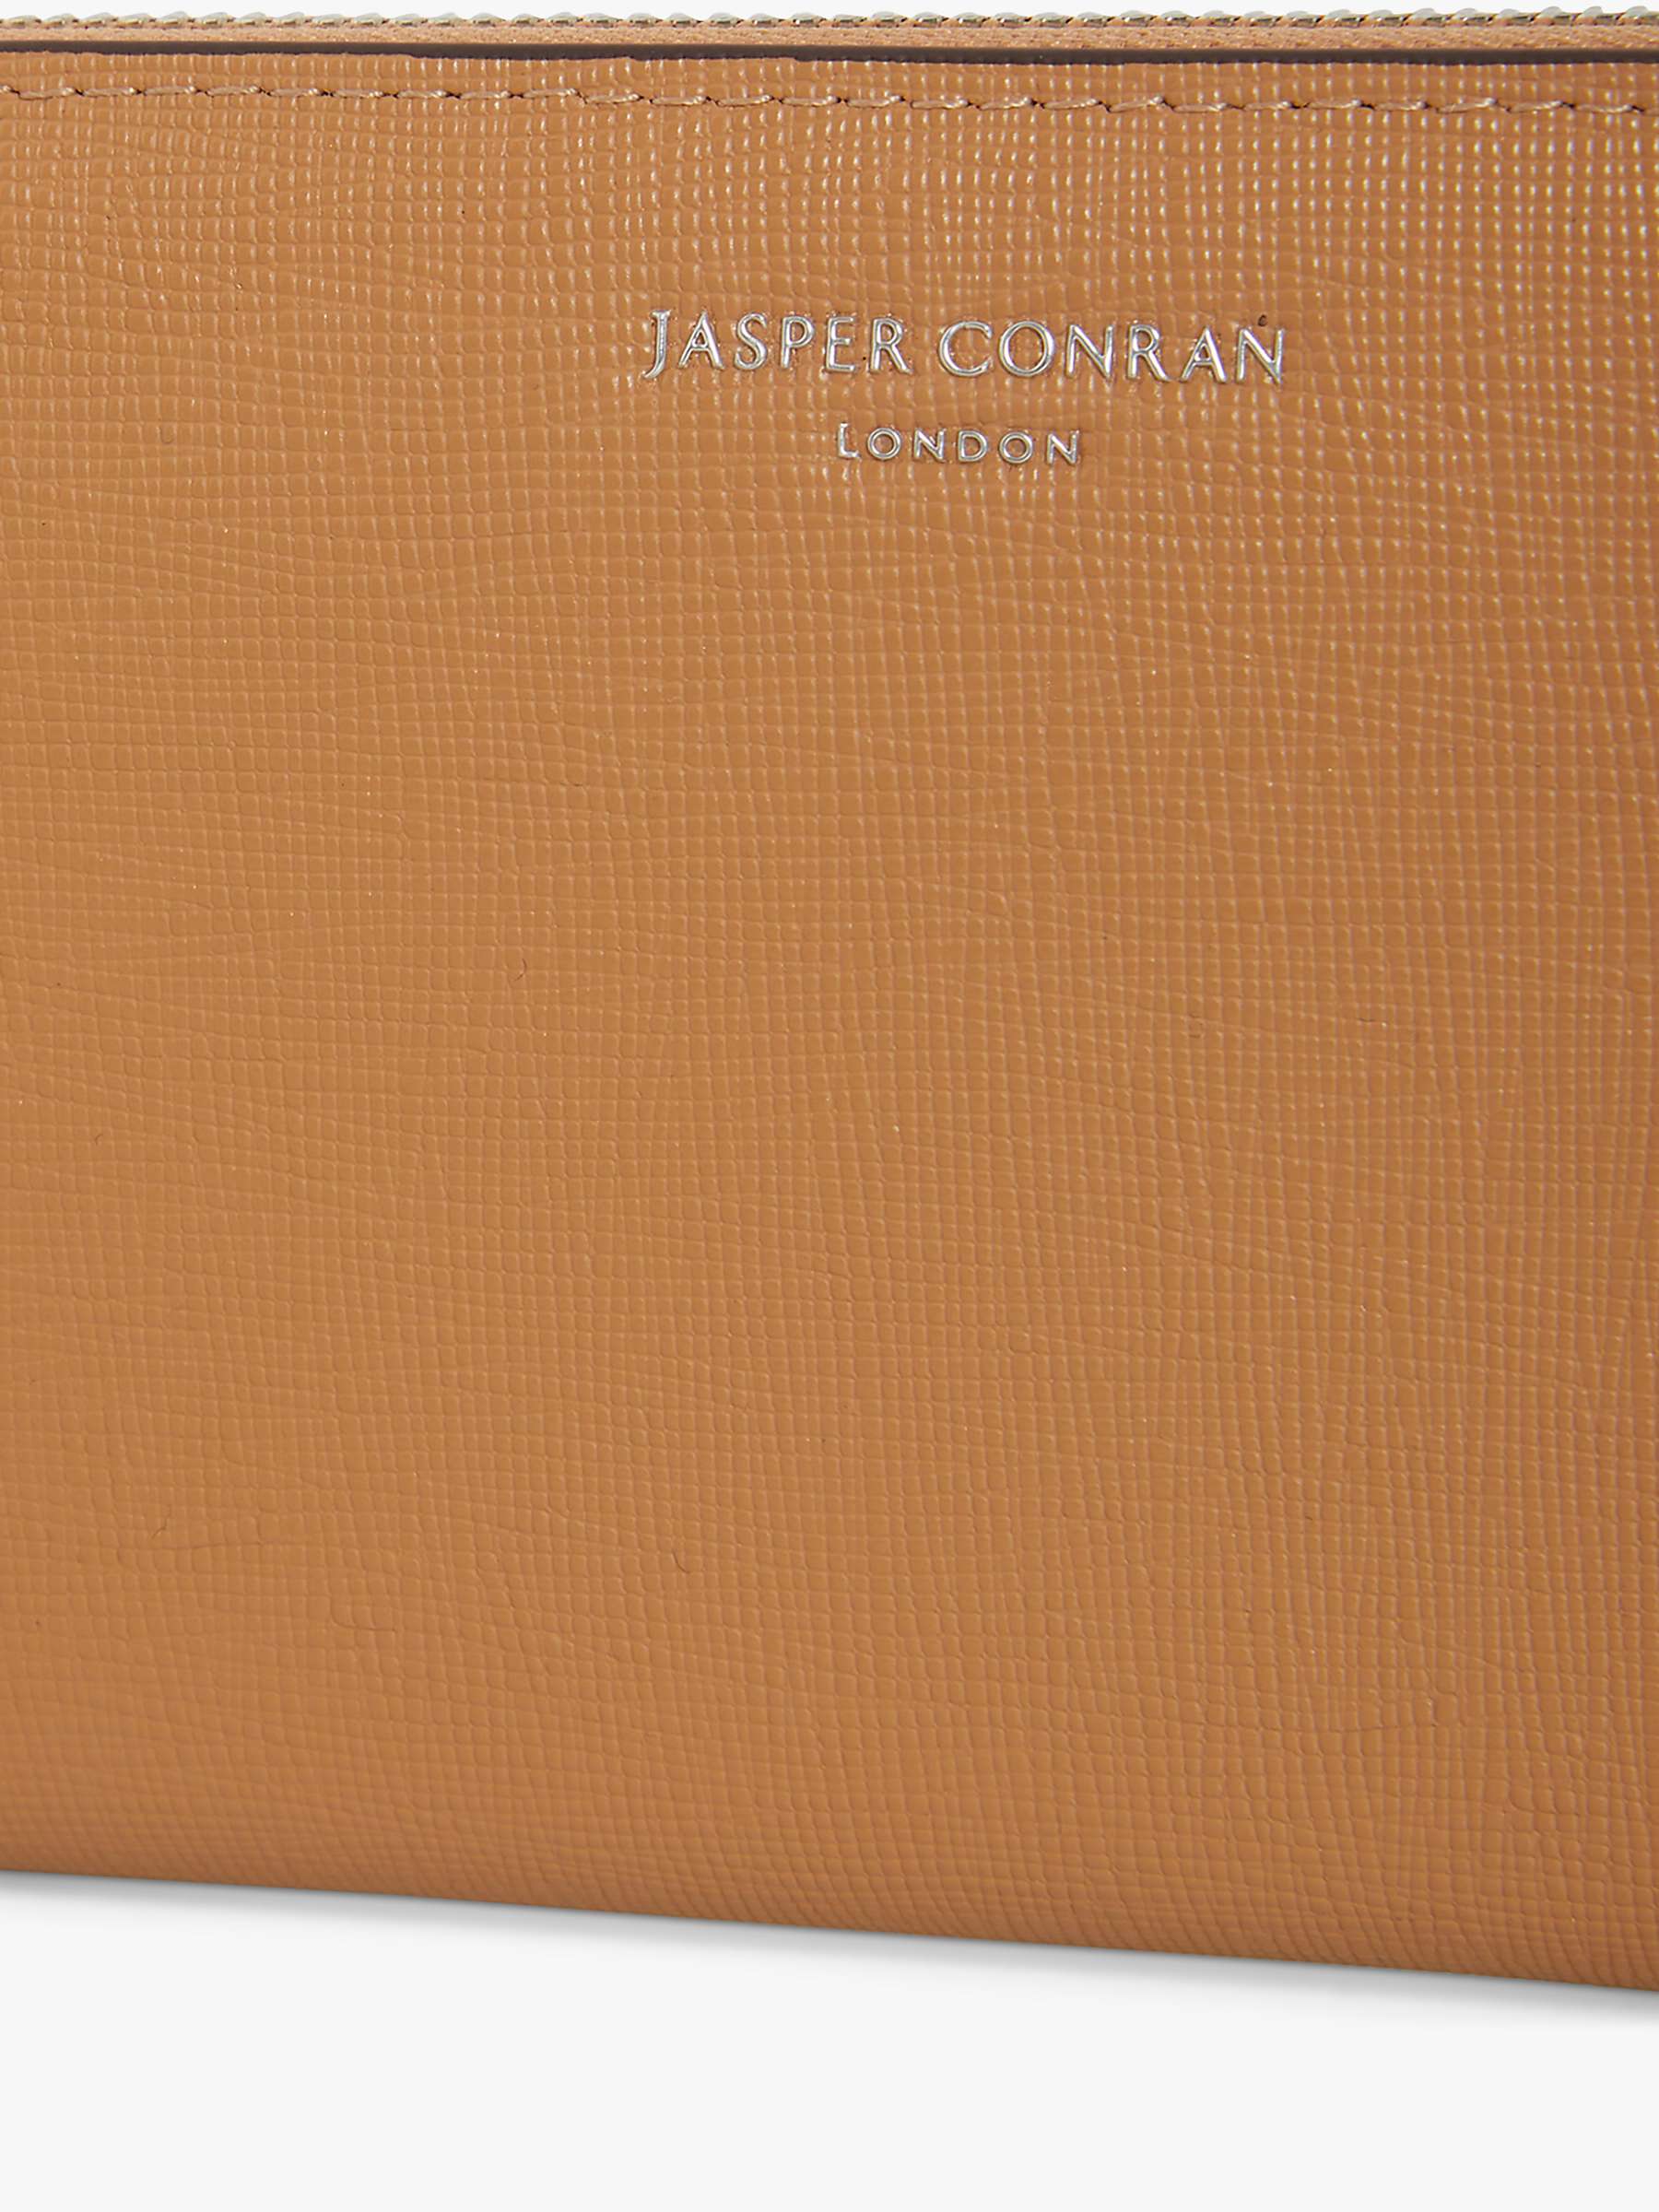 Buy Jasper Conran London Bee Large Cross Hatch Leather Purse, Camel Online at johnlewis.com